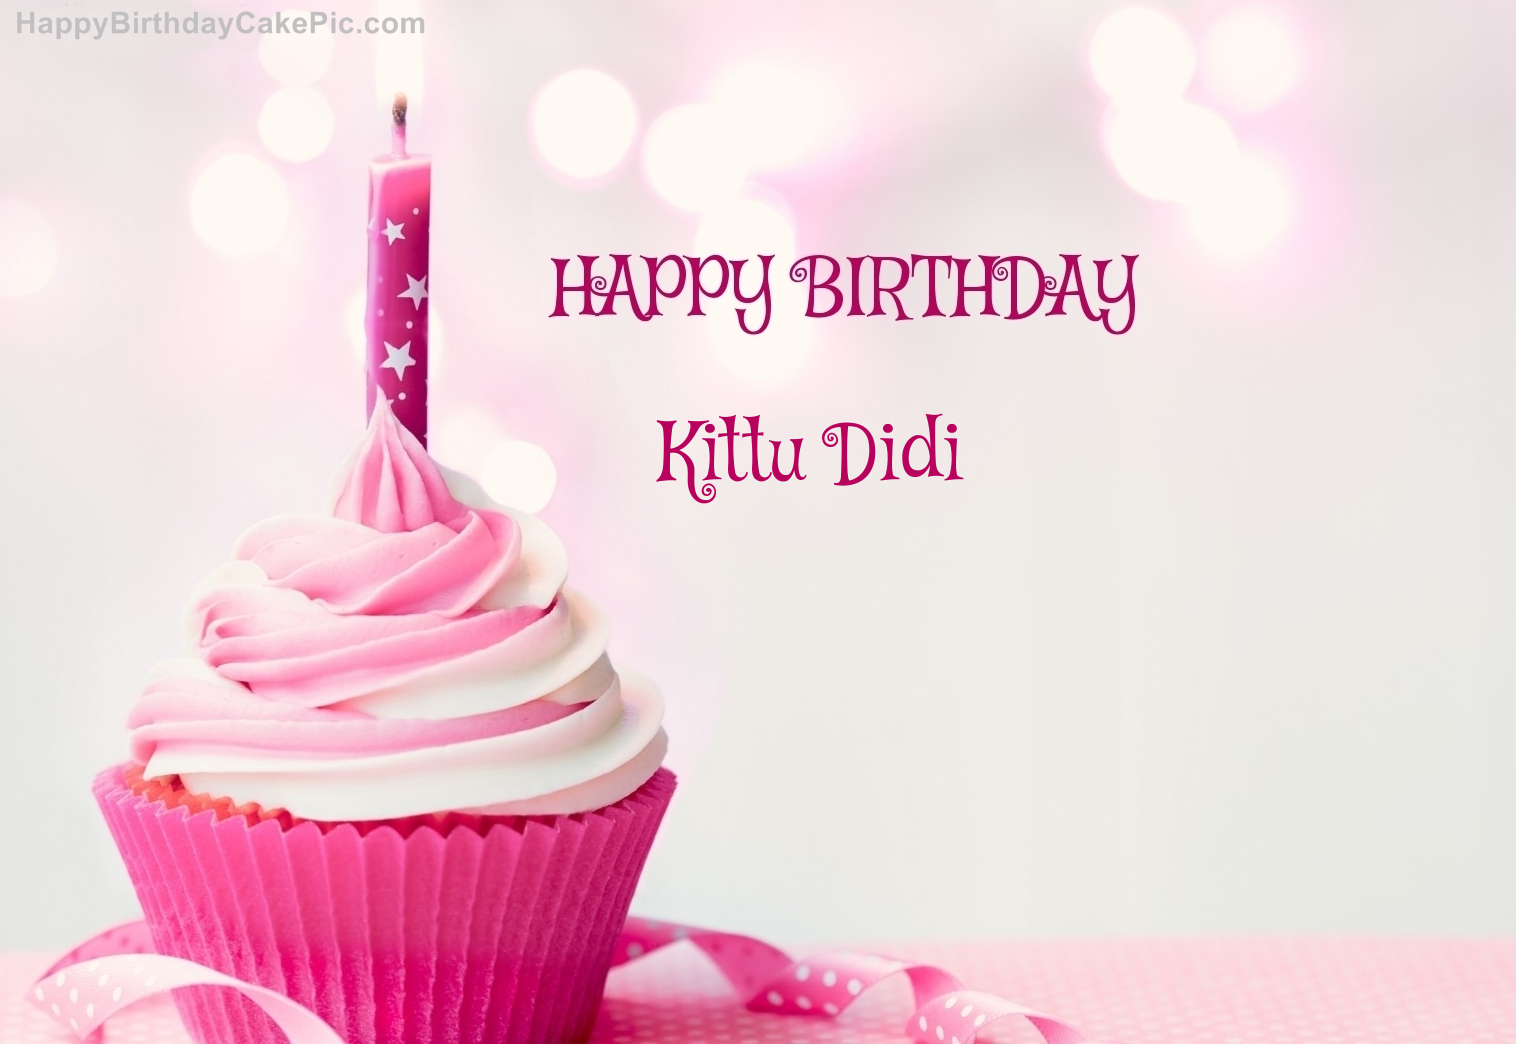 ️ Happy Birthday Cupcake Candle Pink Cake For Kittu Didi